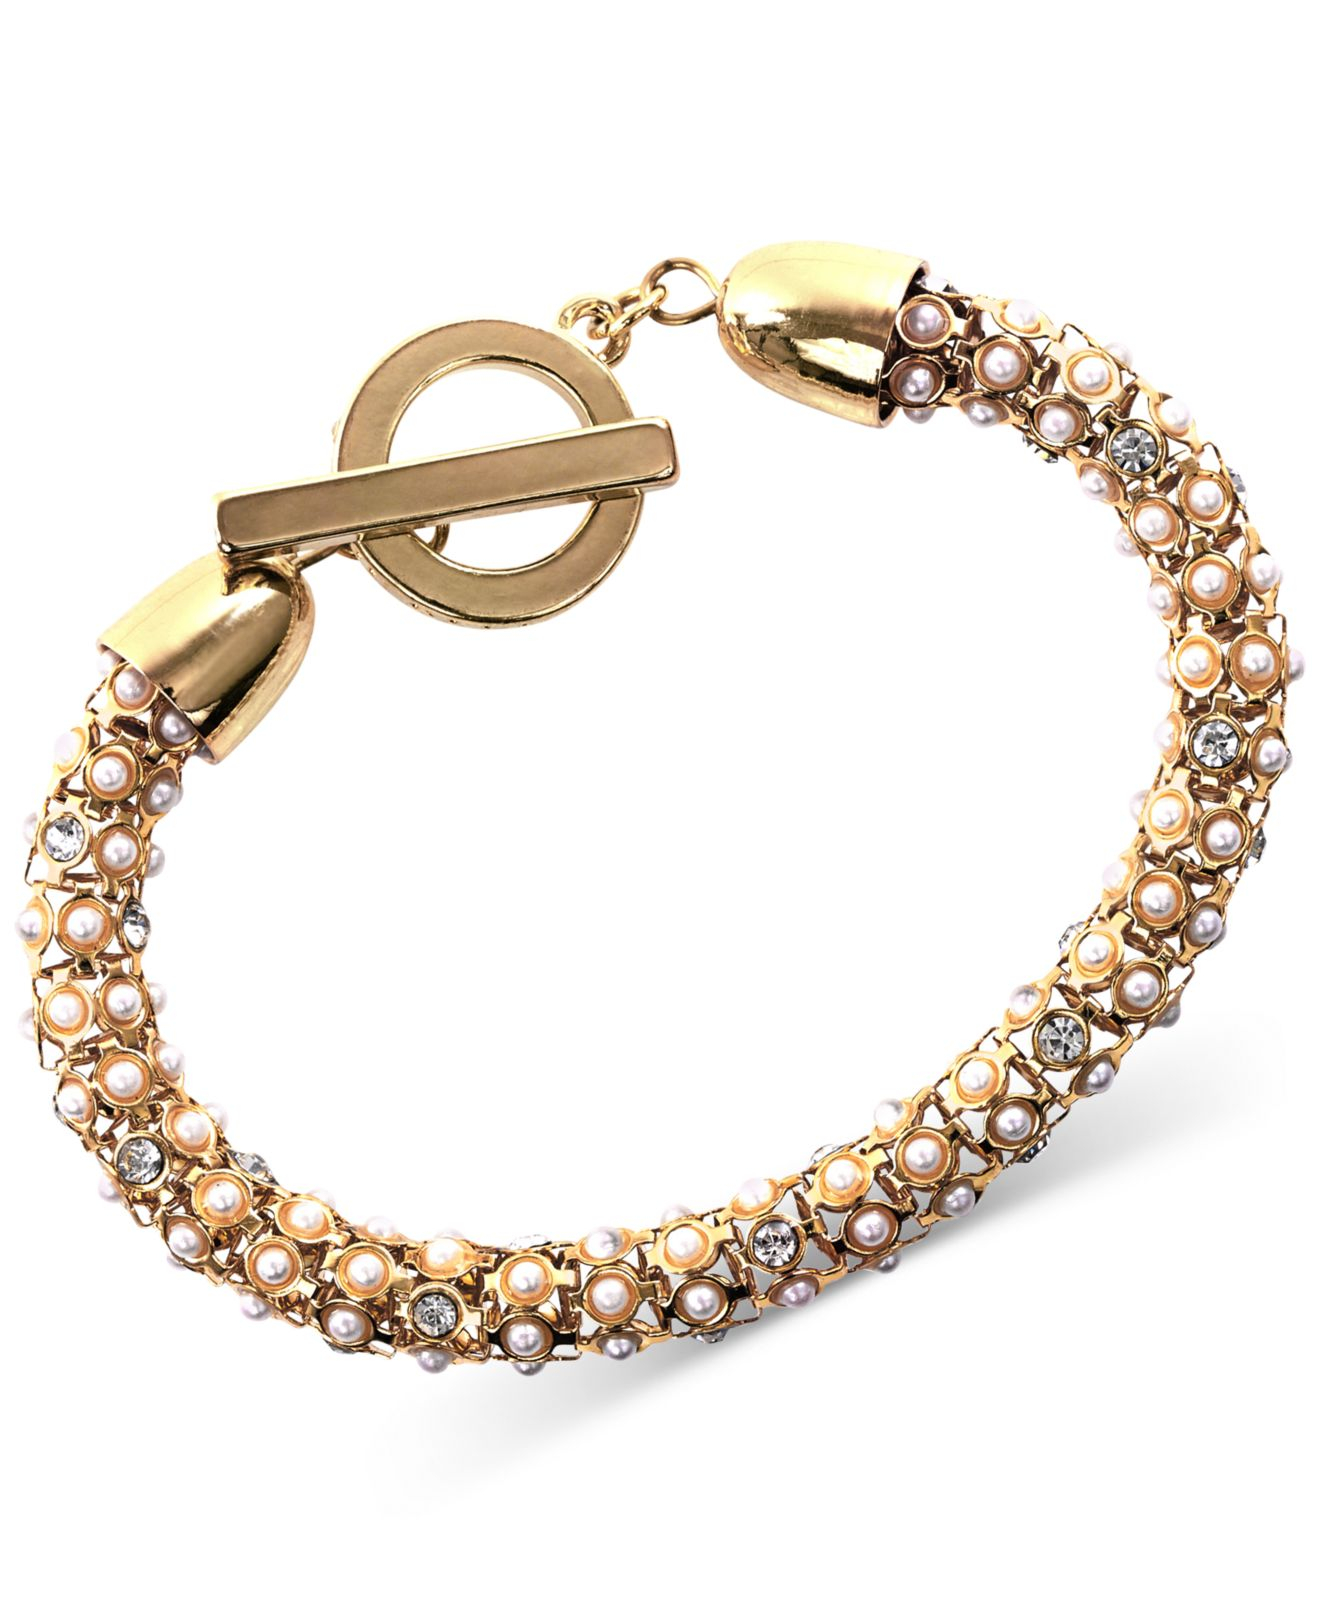 Lyst - Anne Klein Gold Tone And Pearl Tubular Bracelet in Metallic